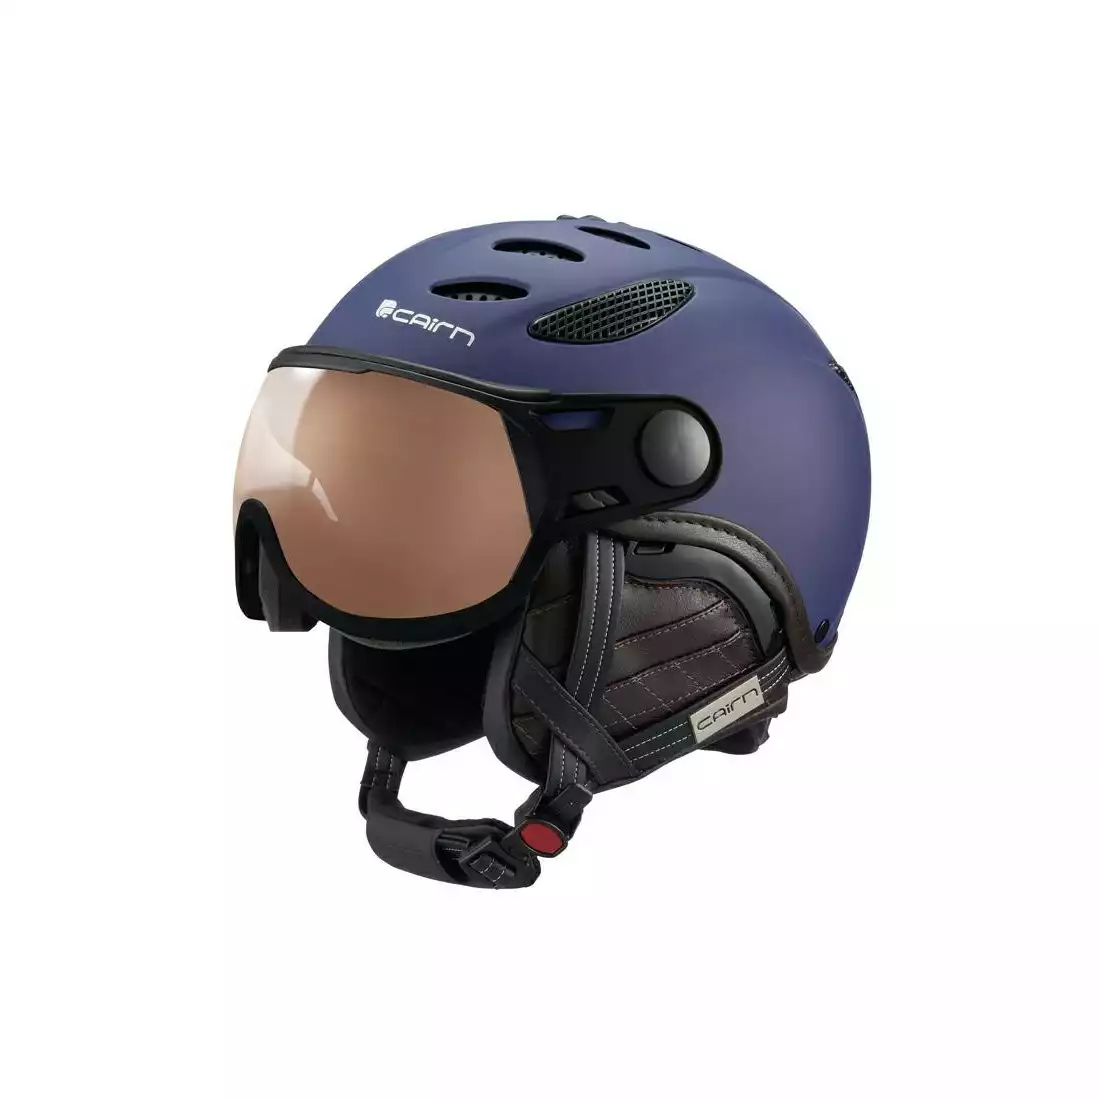 CAIRN ski / snowboard helmet COSMOS photochromic, navy blue, 0605830105